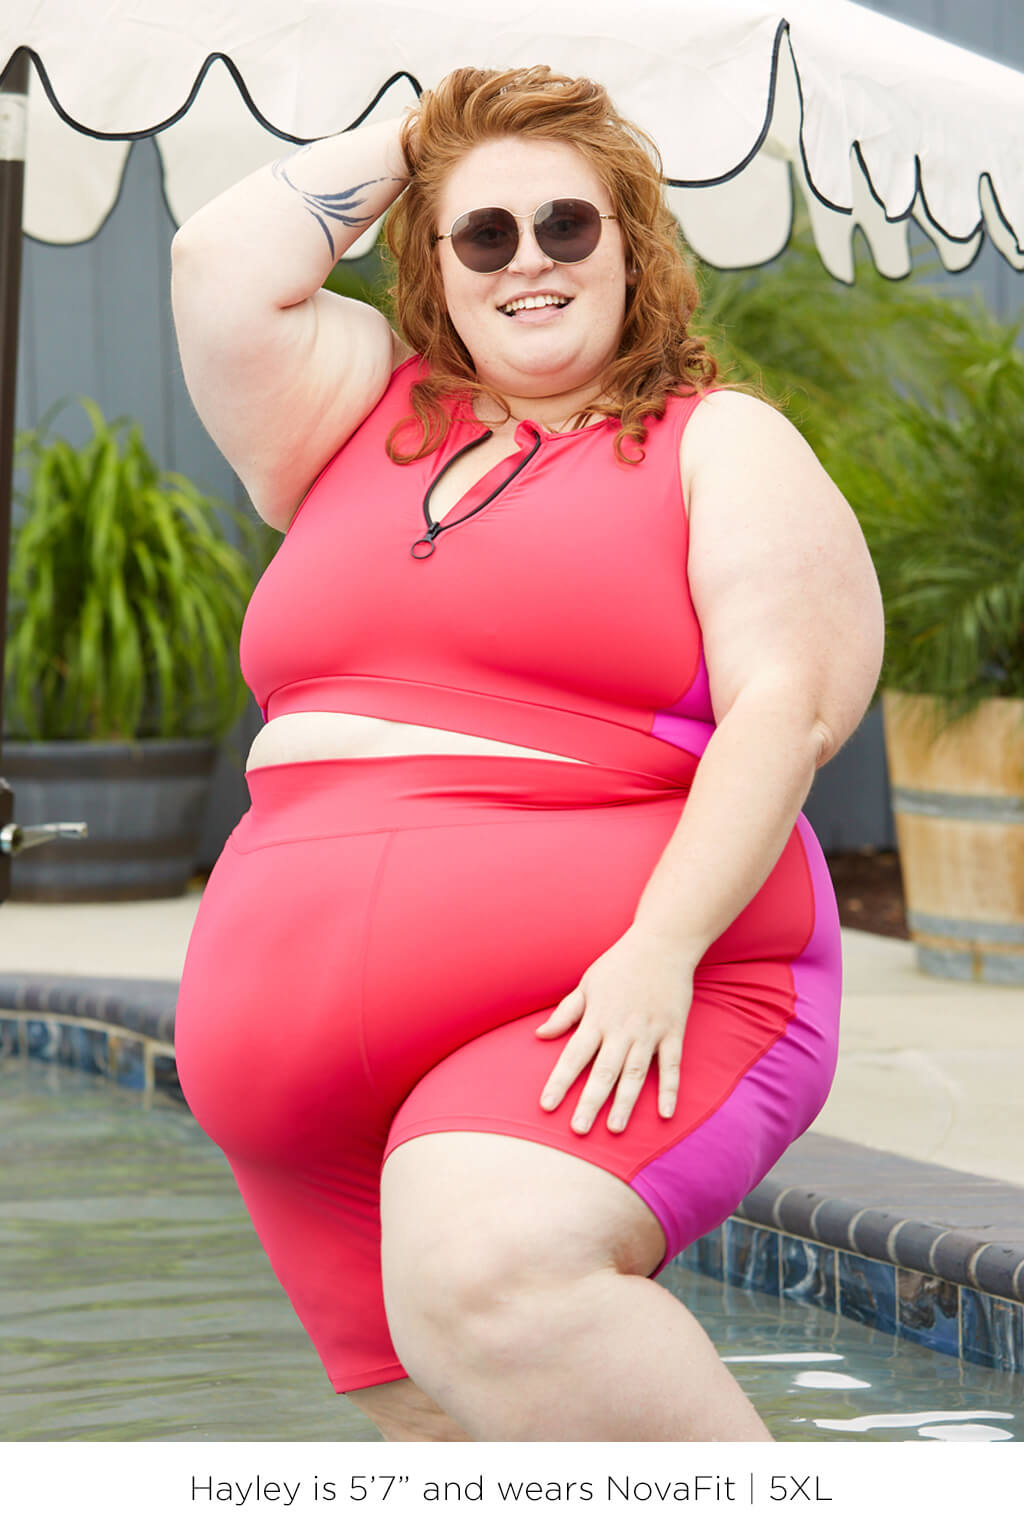 Plus size model wearing 9 Inch Swim Shorts Colorblock Fuchsia in size 5XL.